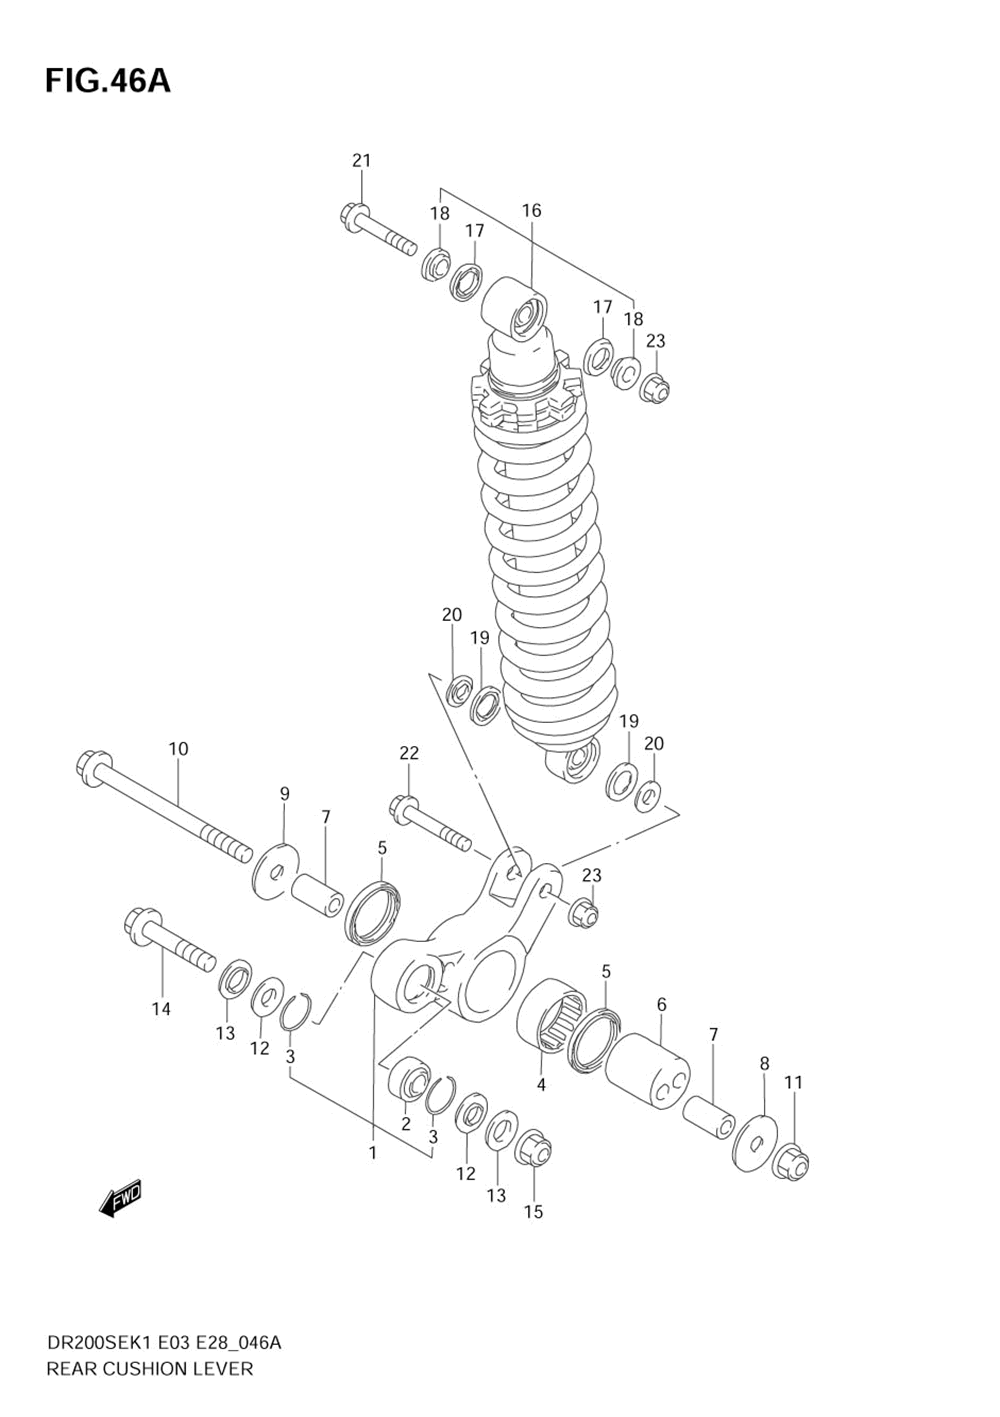 Rear cushion lever (model k4_k5)